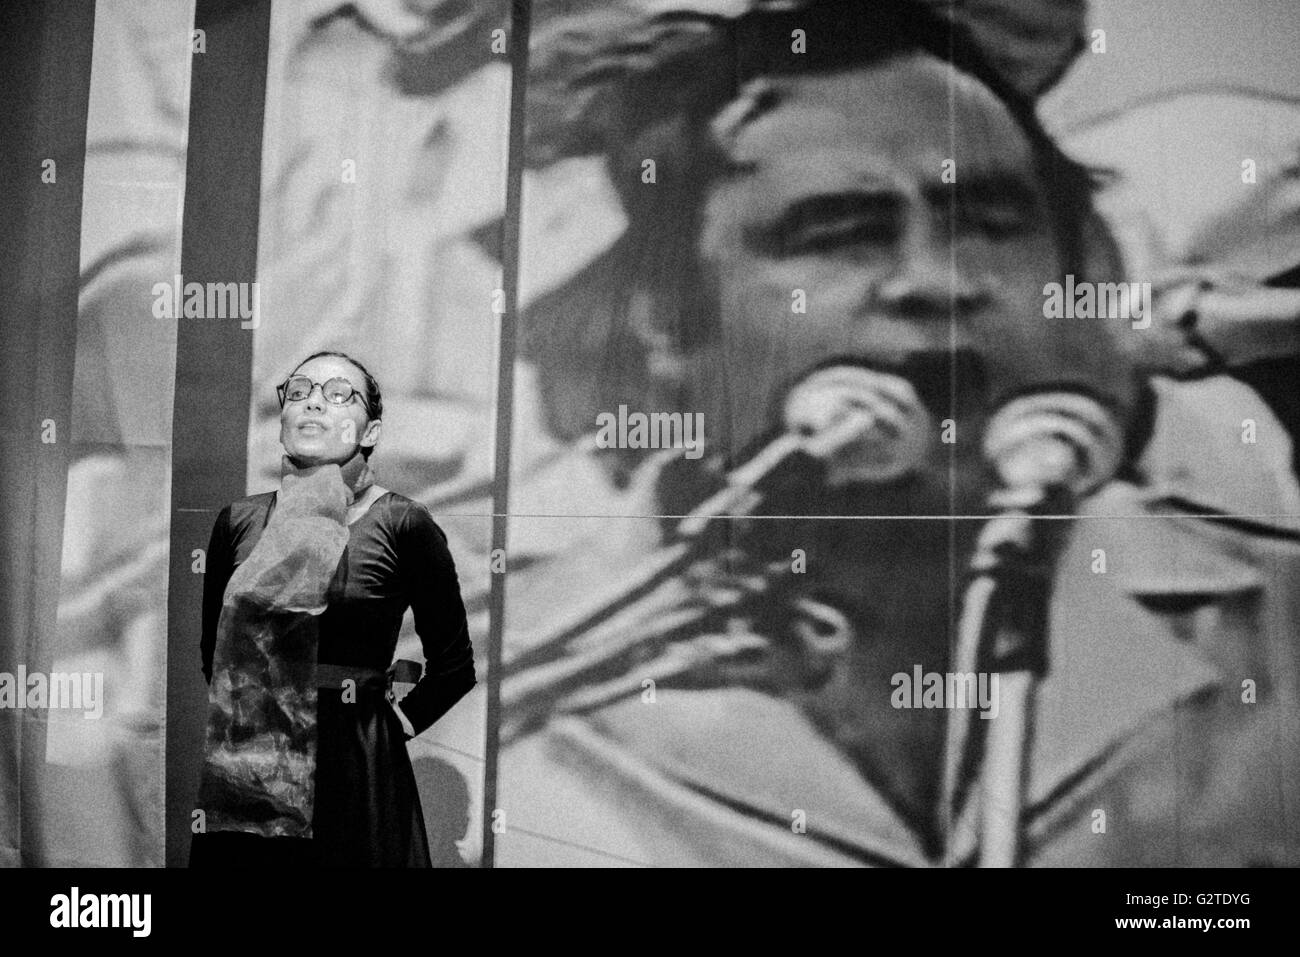 TeatroMujer Company. Adaption des klassischen Stücks 'Antigone' über zivile Opfer des kolumbianischen Konflikts. Bogotá, Kolumbien, Südamerika Stockfoto